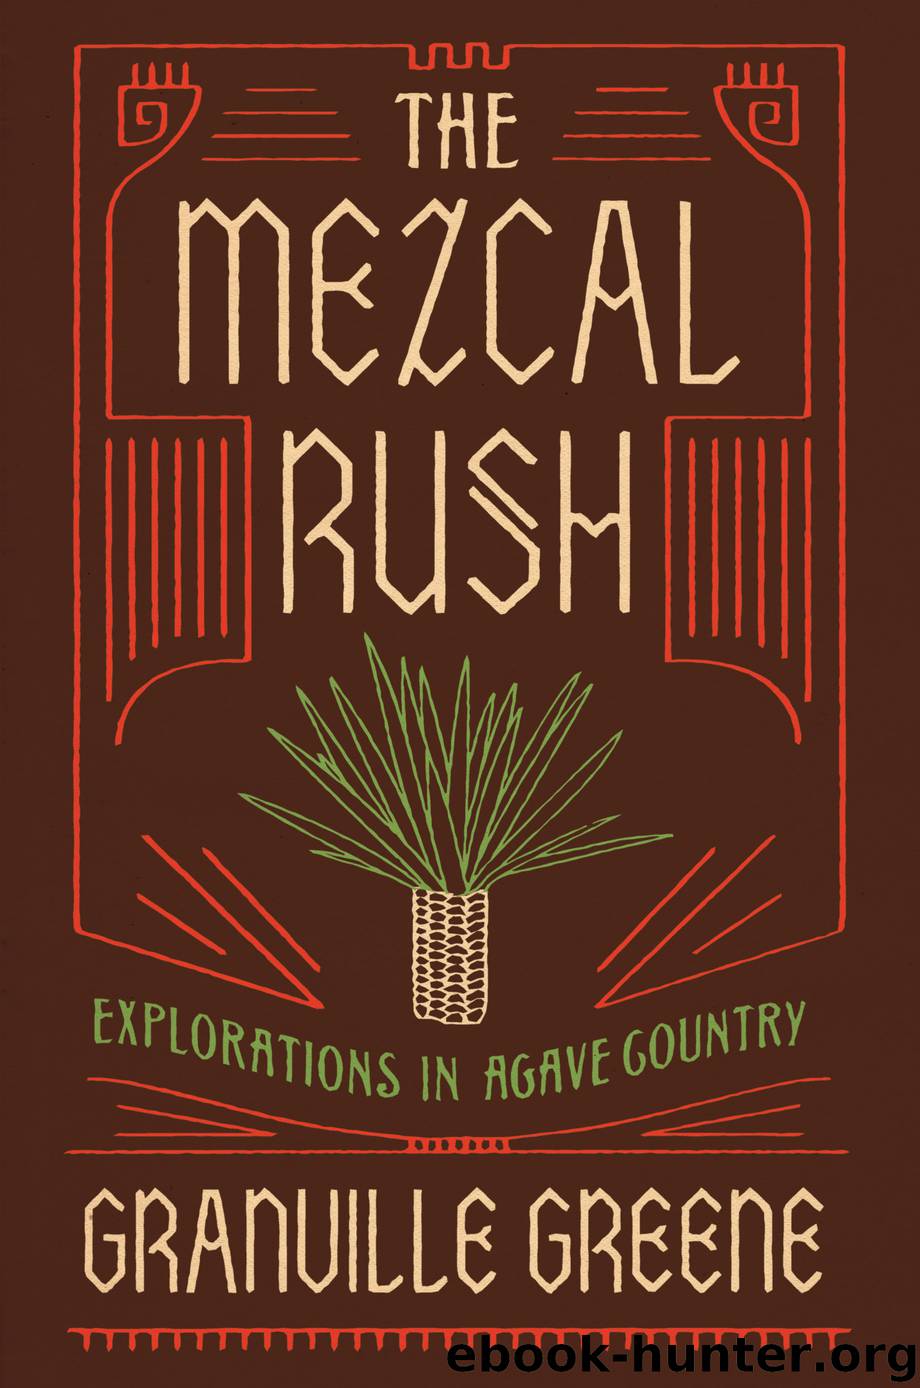 The Mezcal Rush by Granville Greene